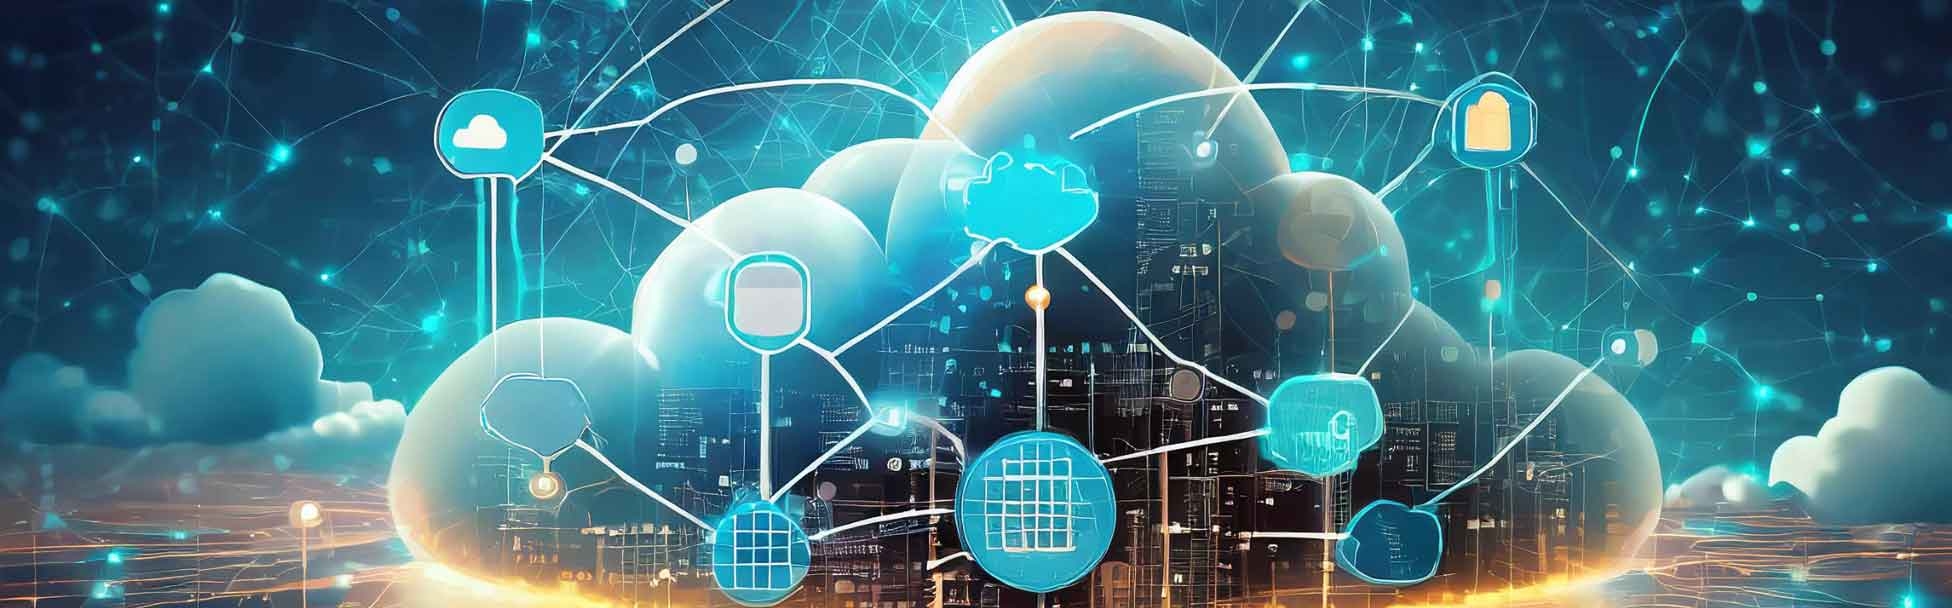 Cloud Computing & Networking